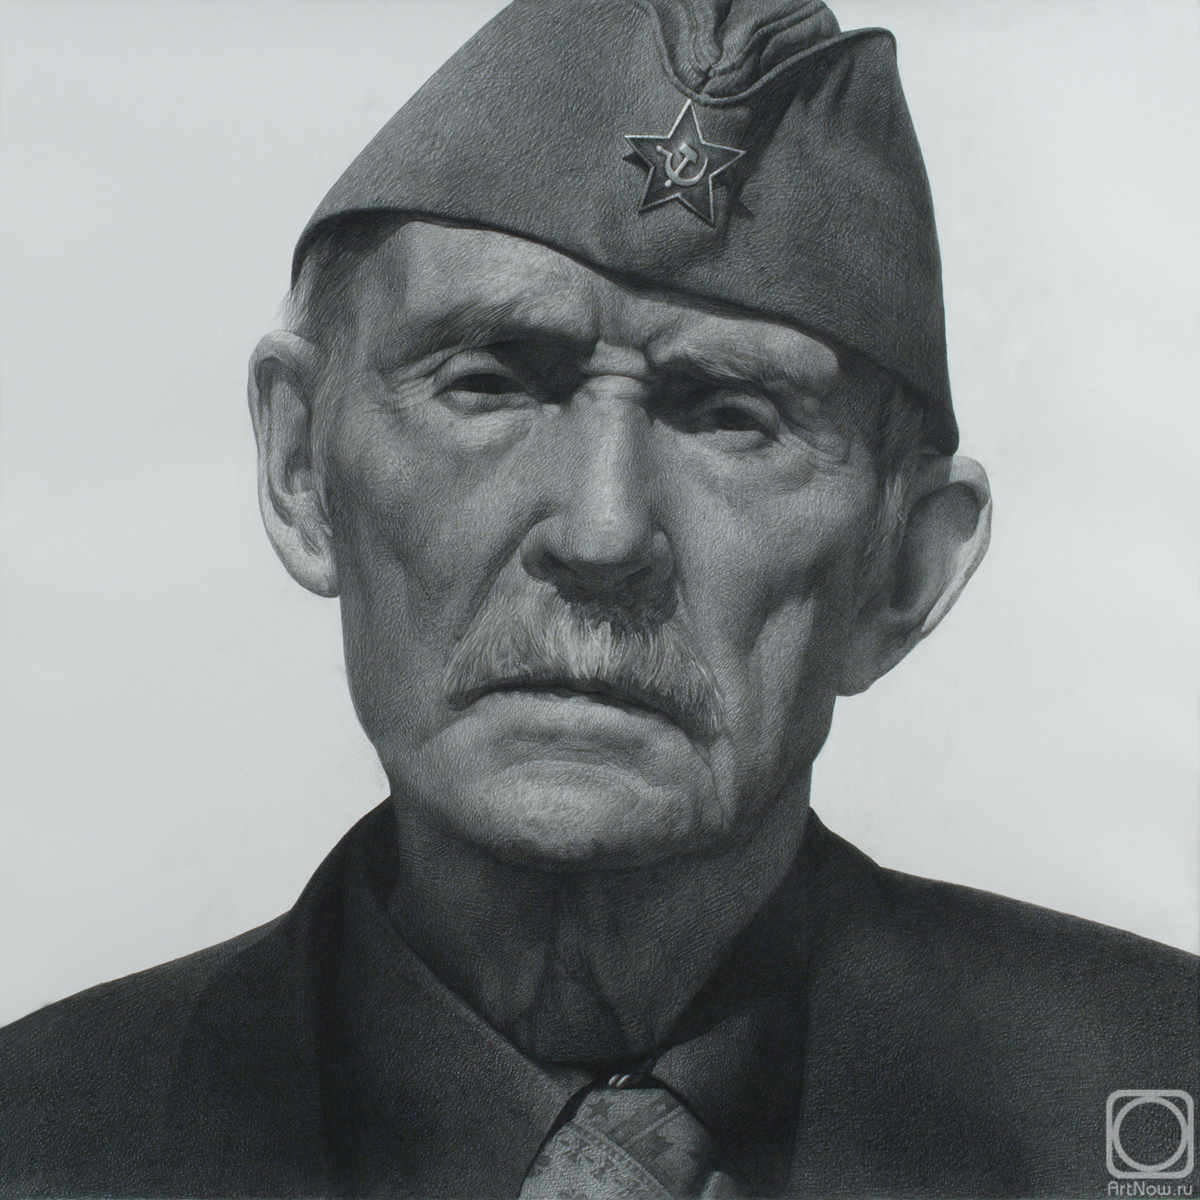 Askarov Ilshat. Portrait of a veteran in a cap